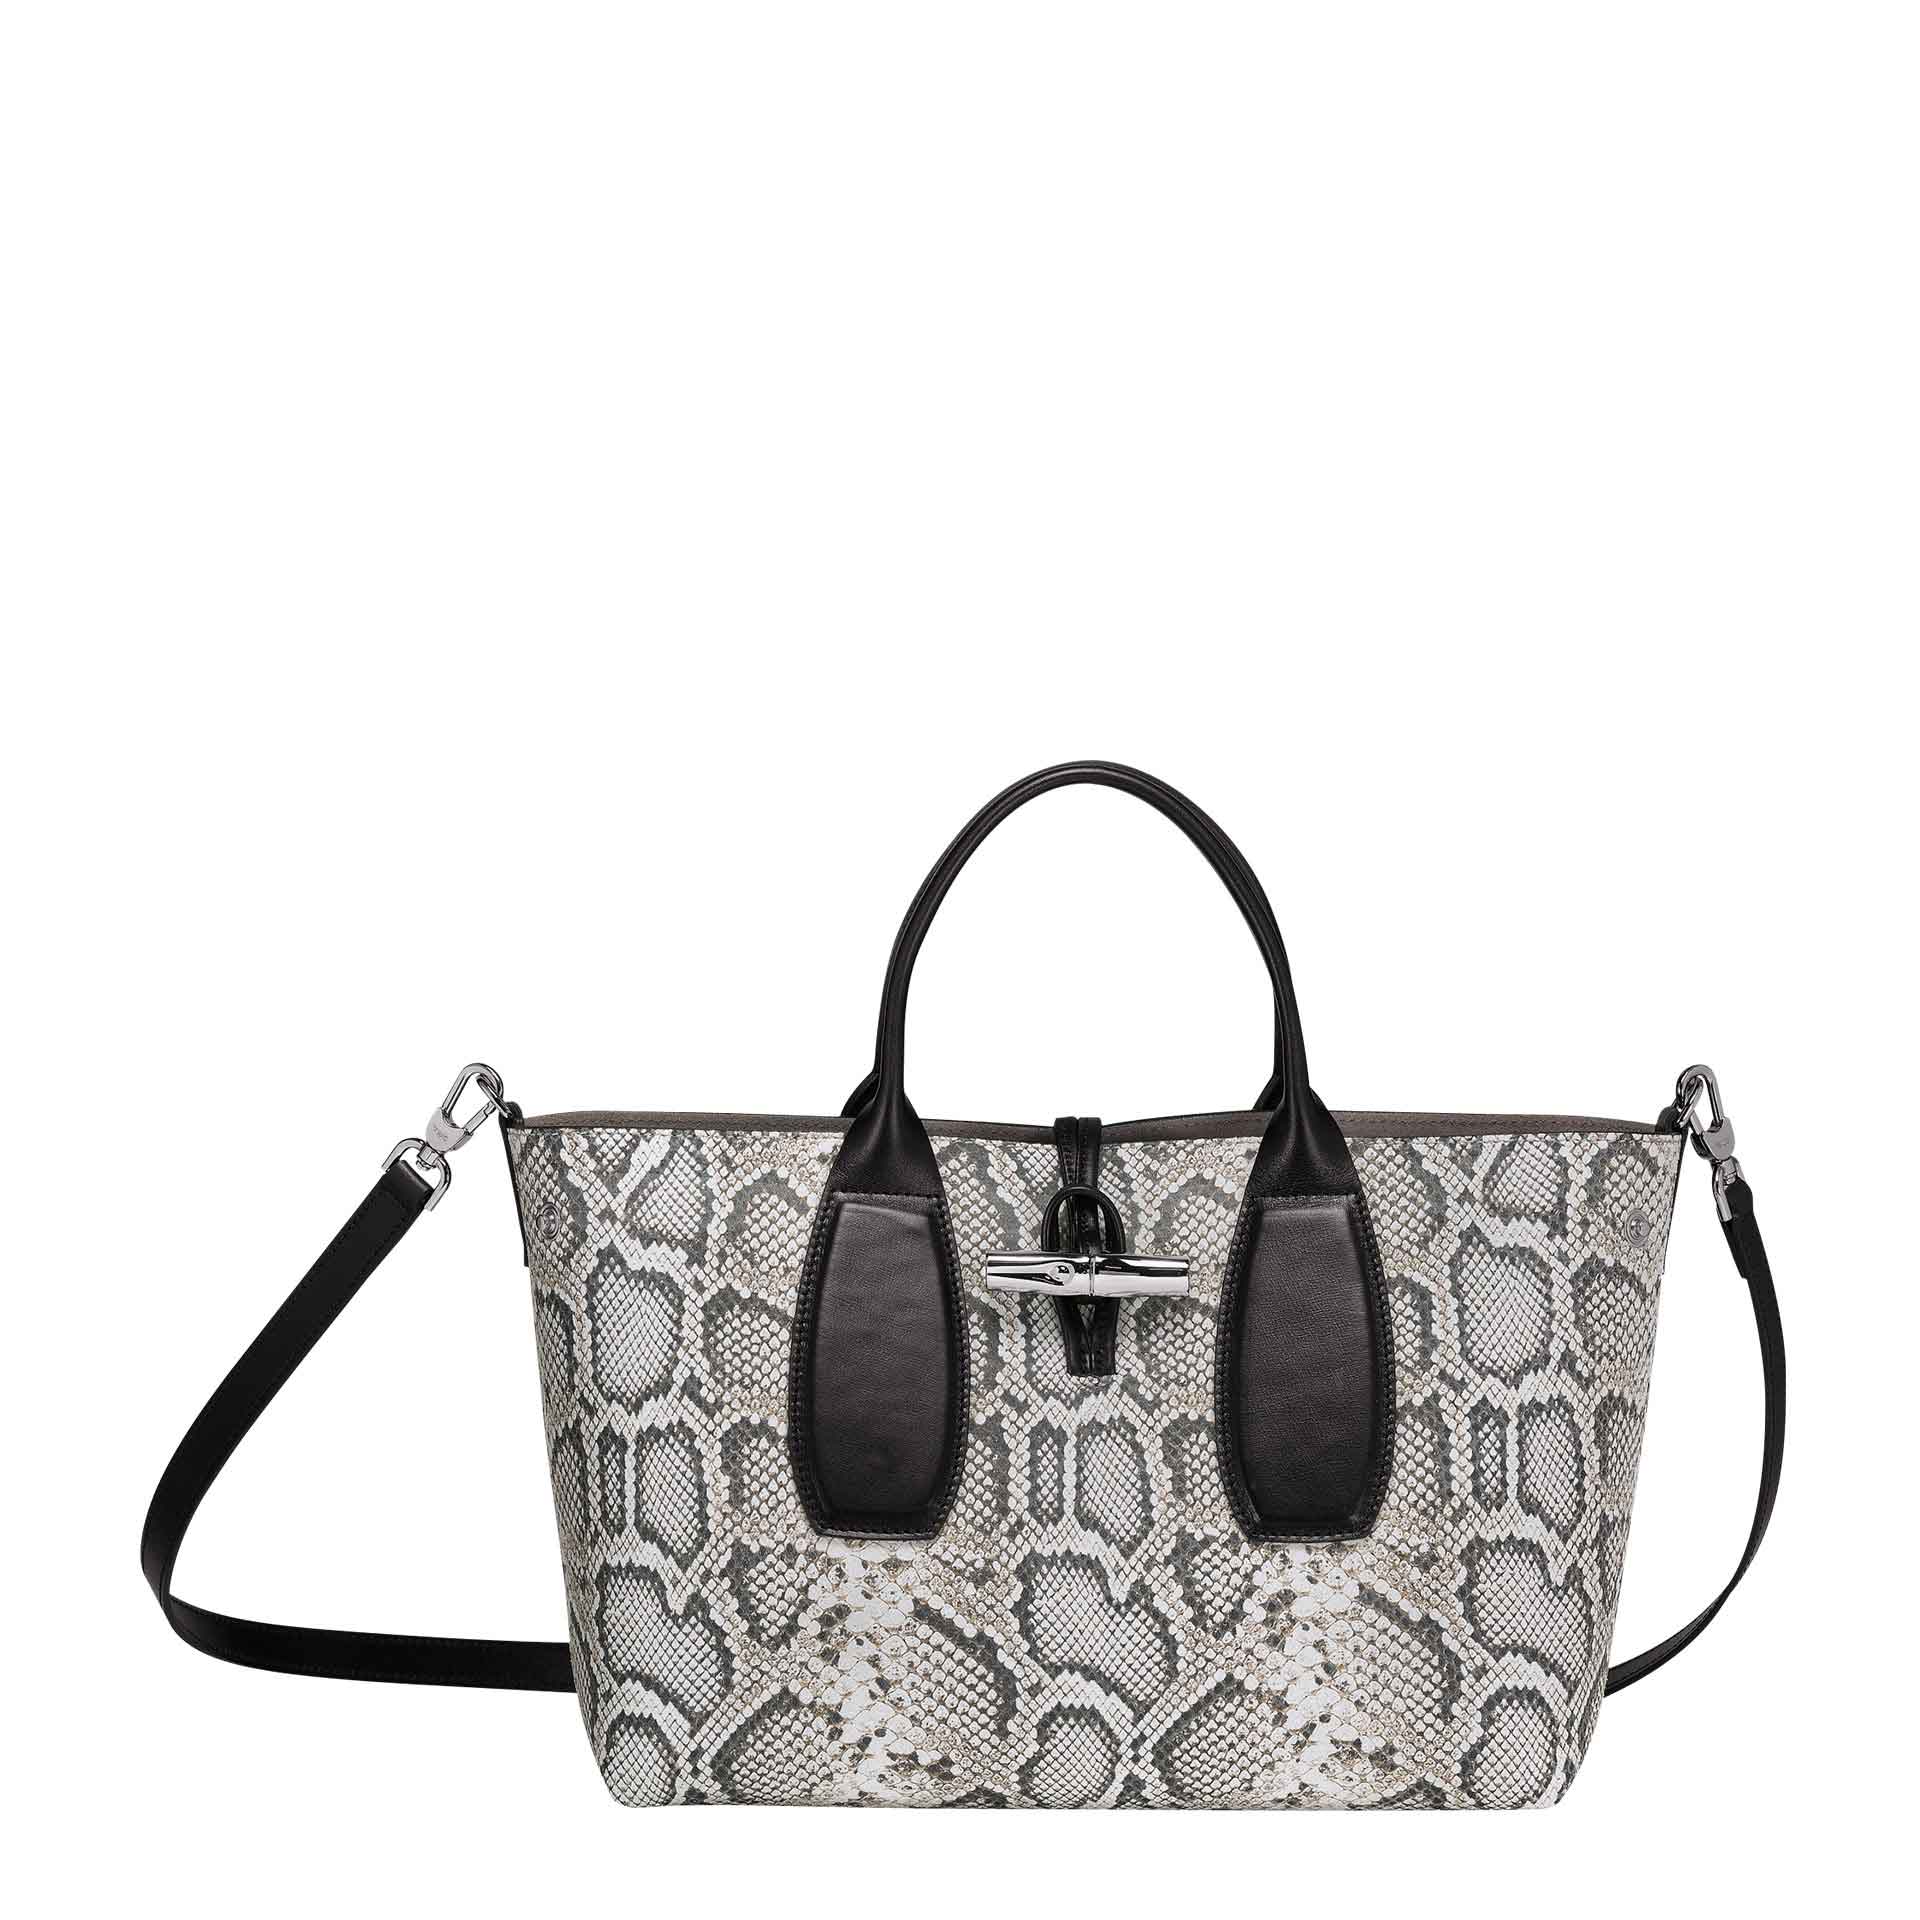 Longchamp Roseau Python Handtasche M black white